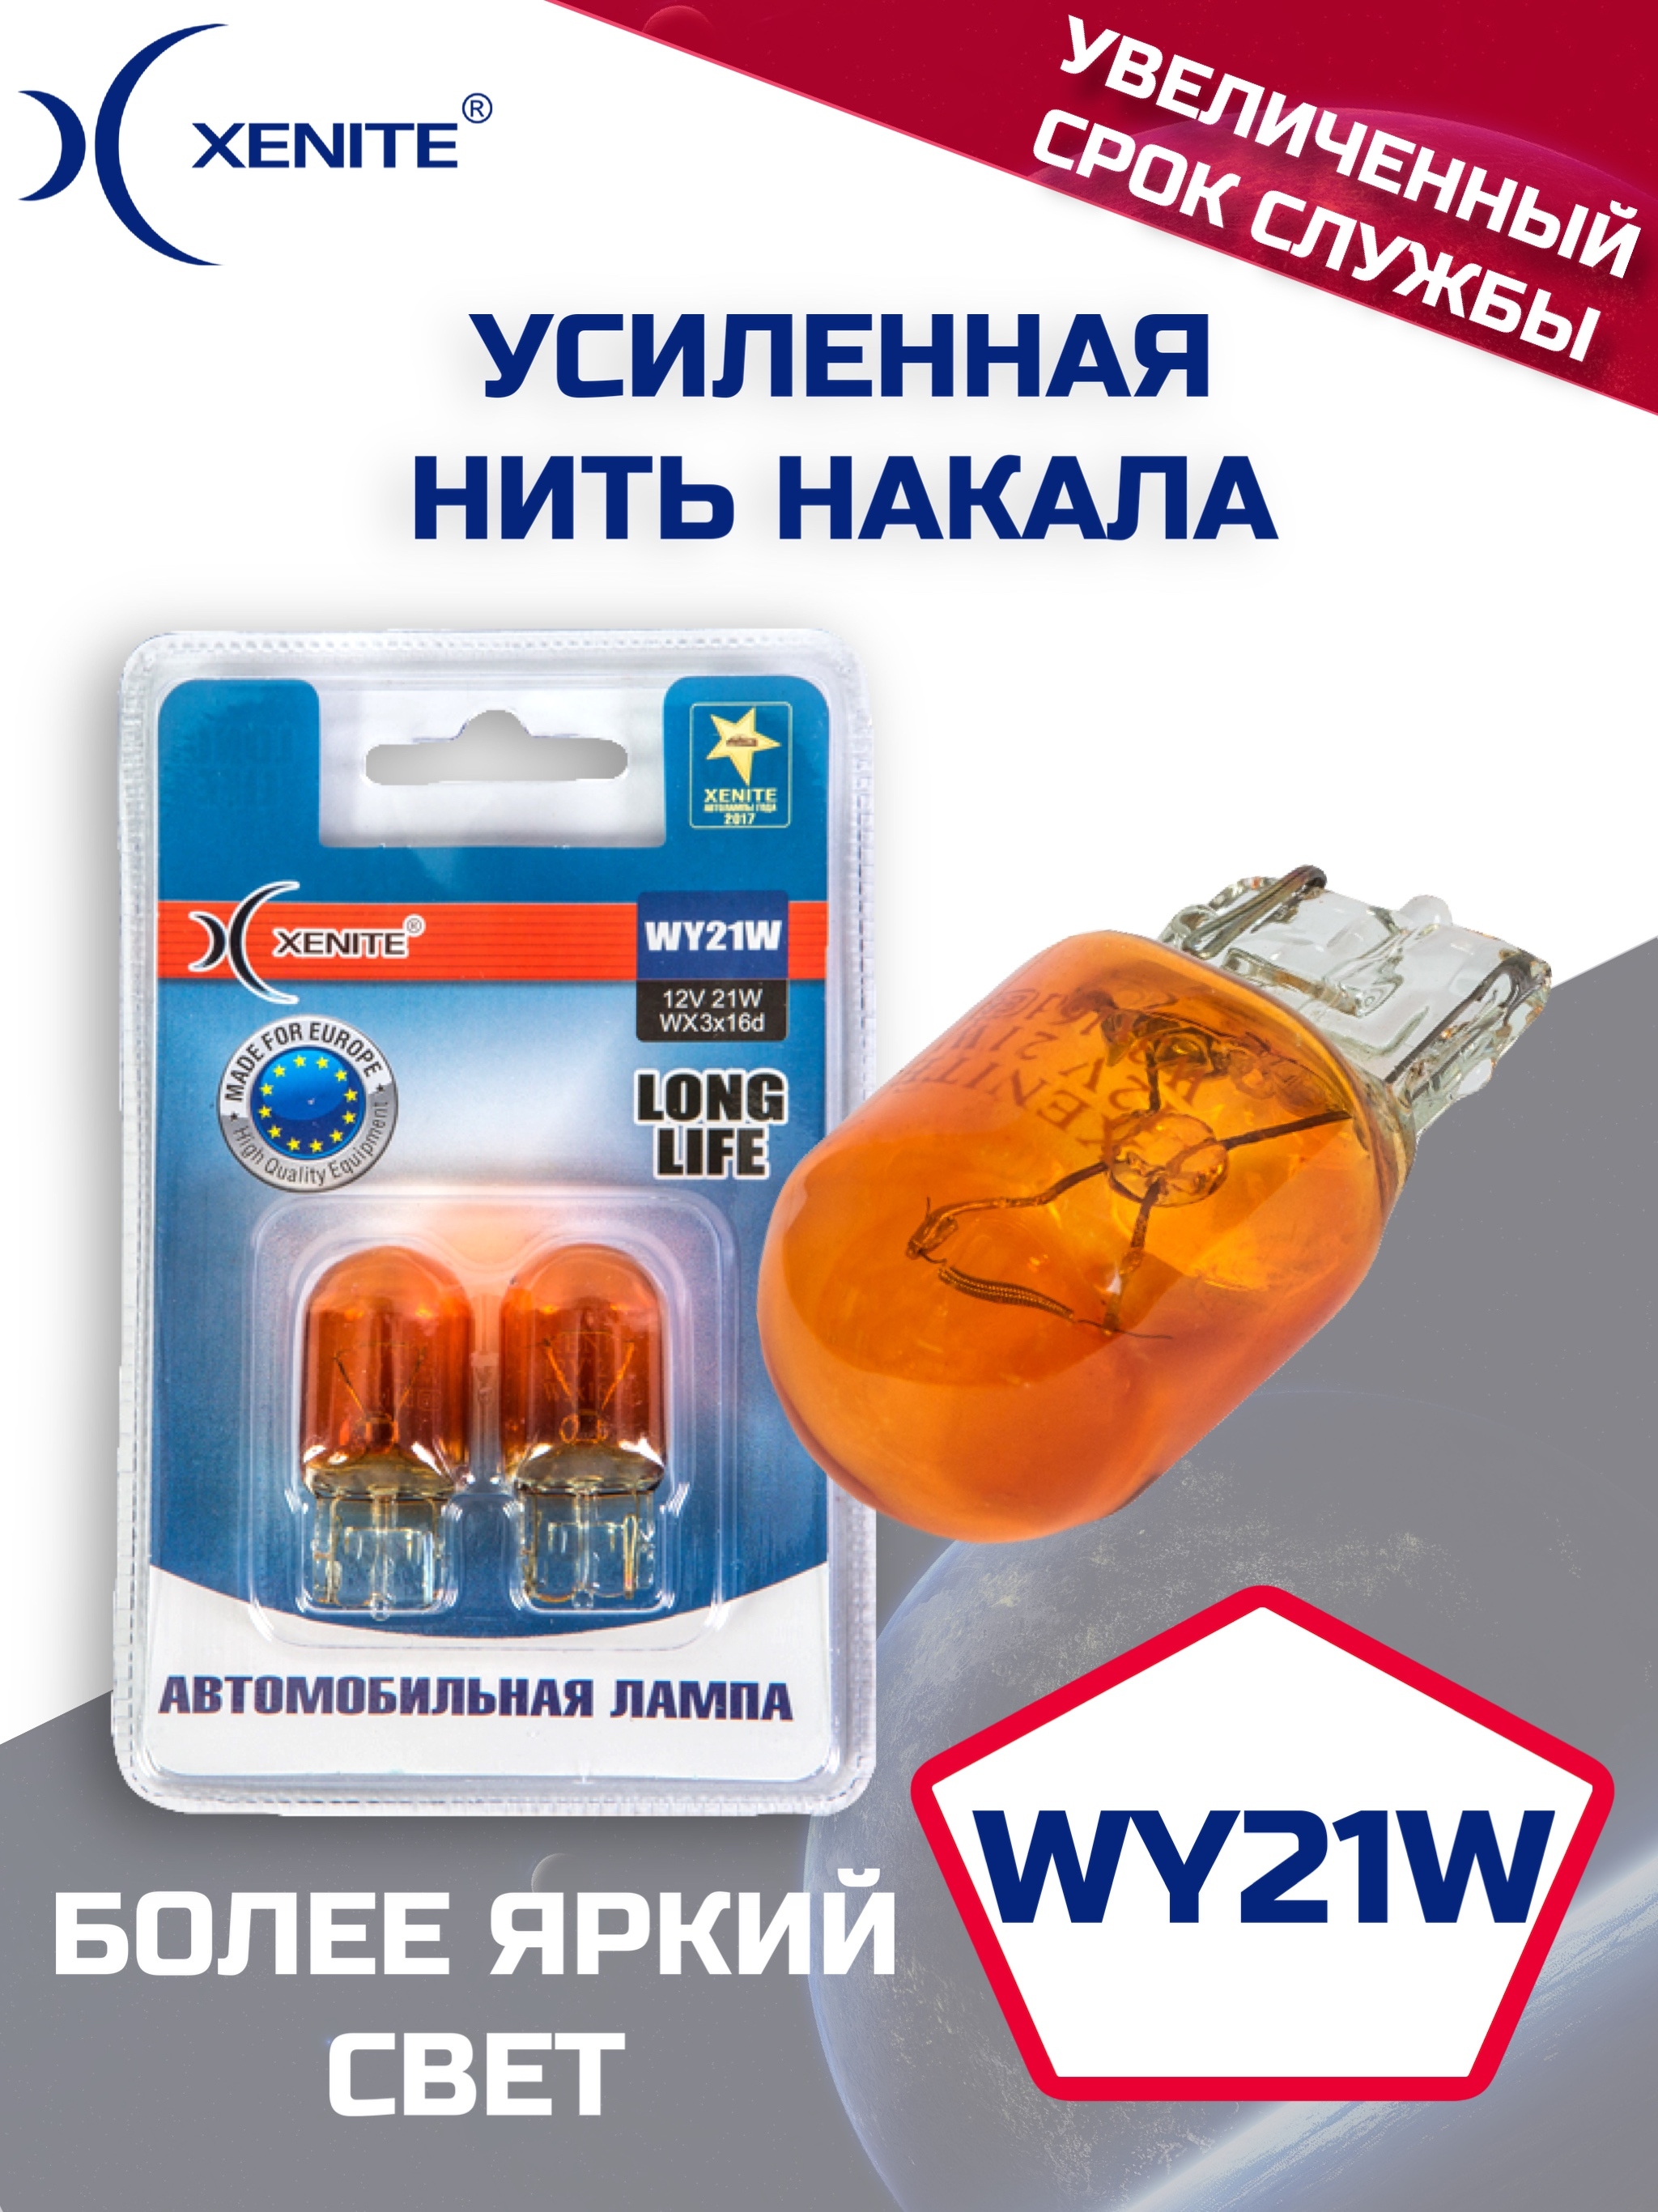 W3X16D 21W – купить в интернет-магазине OZON по низкой цене